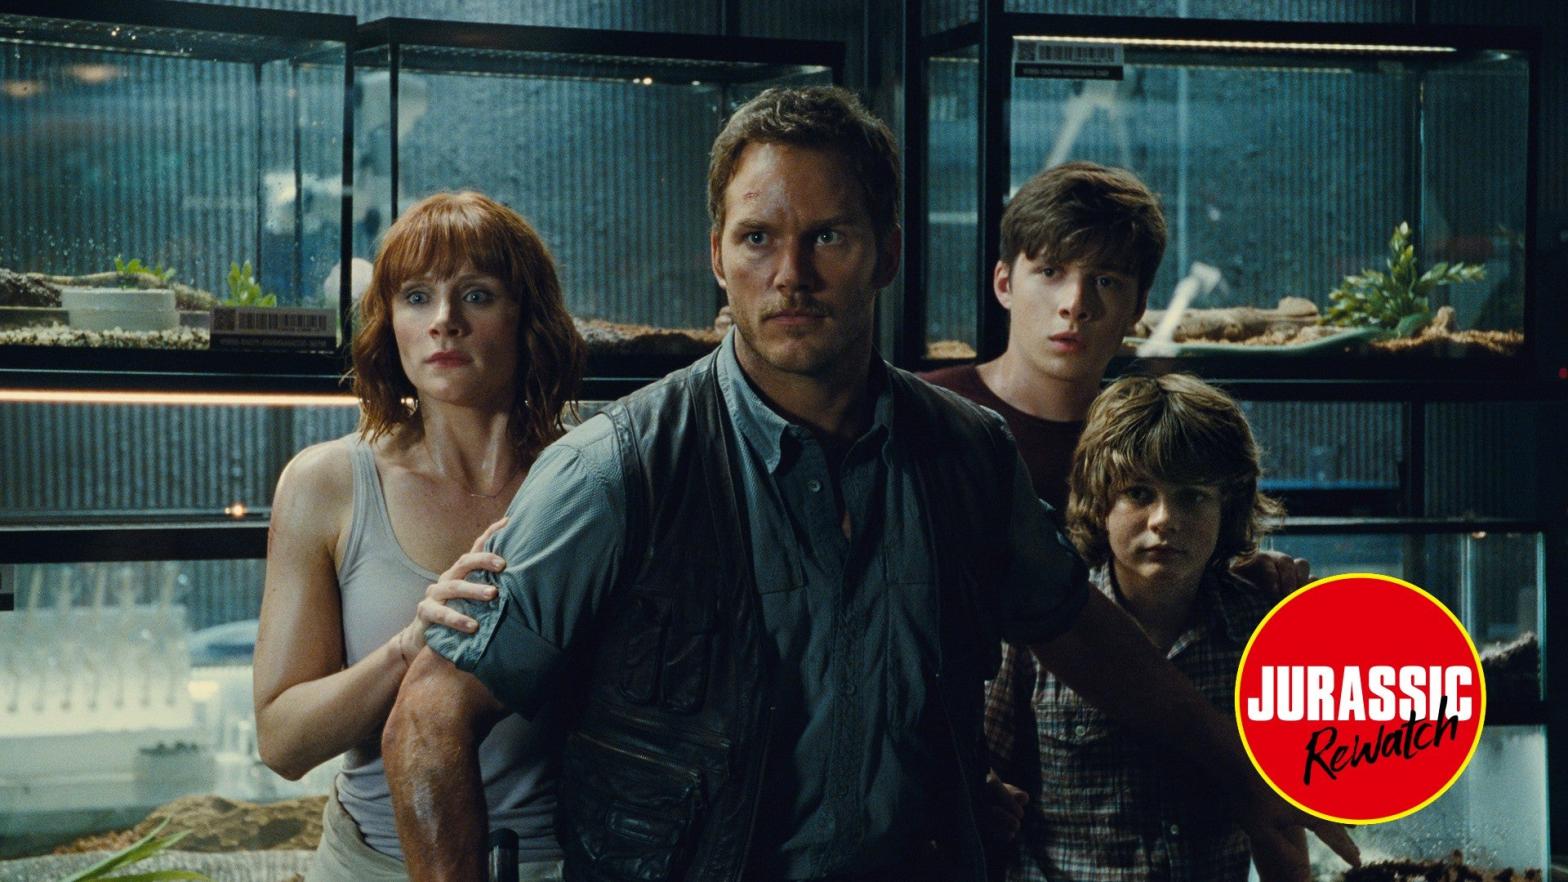 The cast of Jurassic World in peril. (Image: Universal/Amblin)